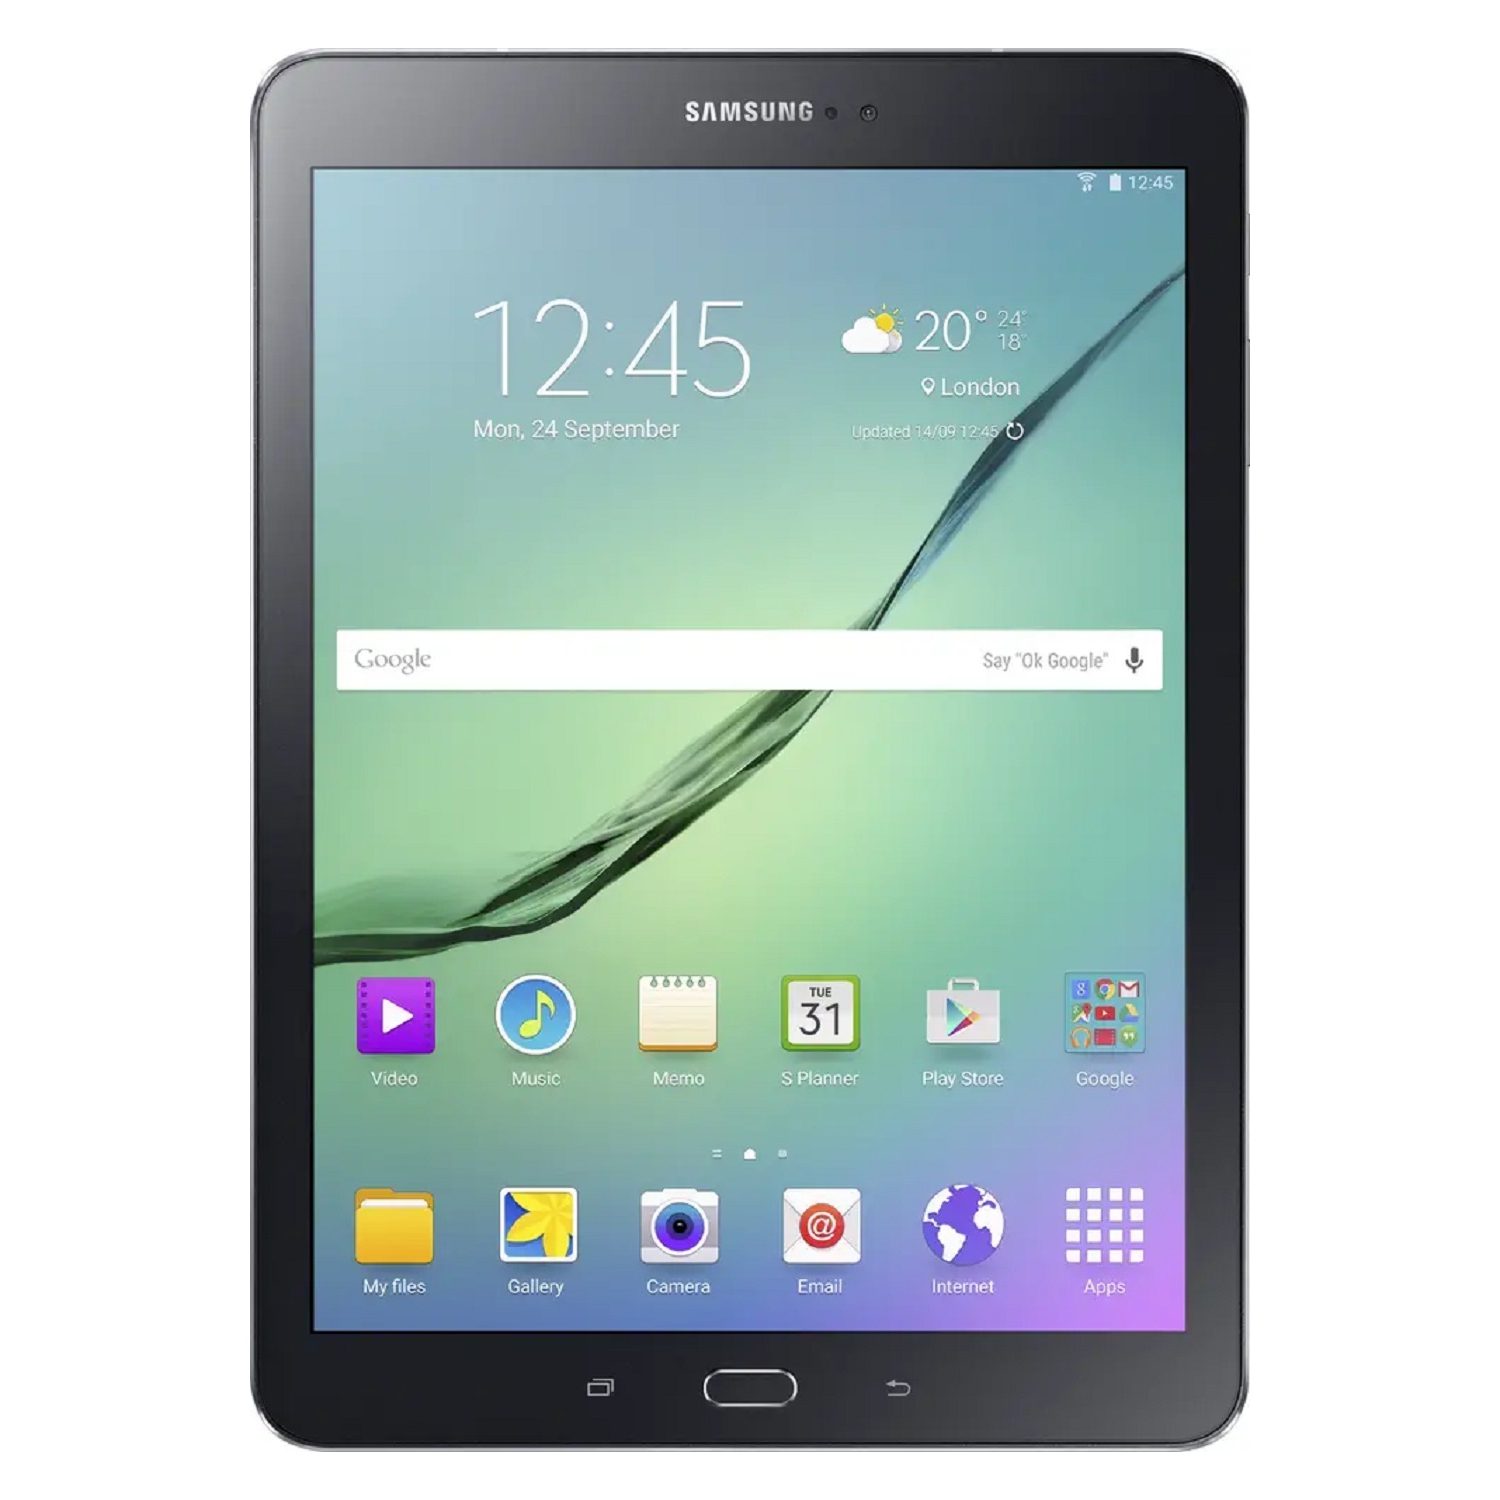 Samsung Galaxy Tab S2 9.7" 32GB Unlocked Tablet (WiFi + Cellular) SM-T818W - International Model - Black - Open Box